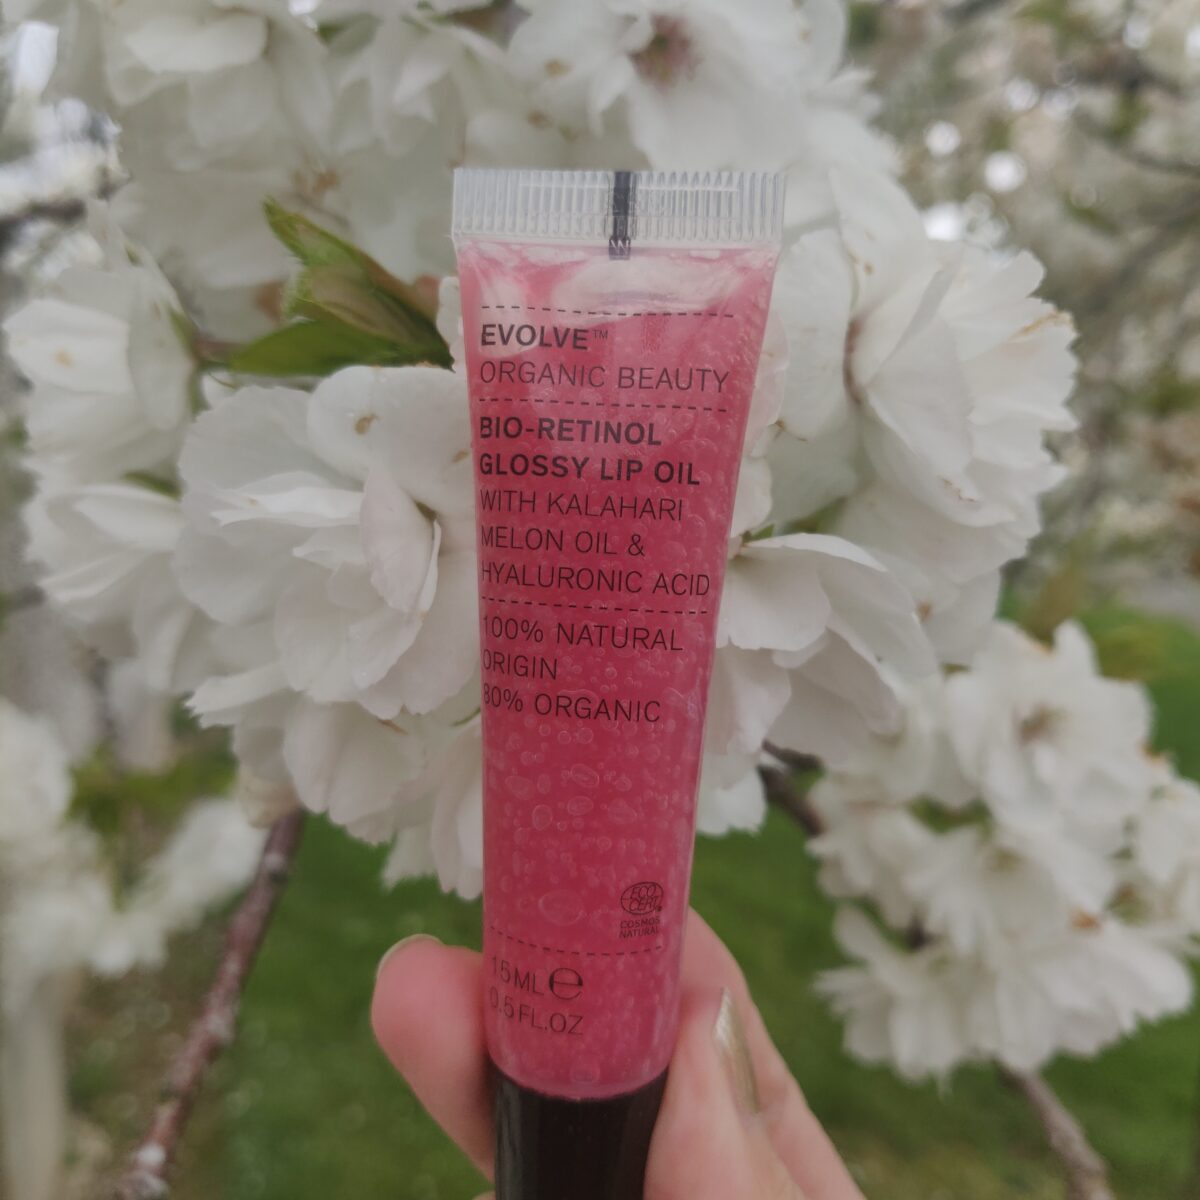 Evolve Organic Beauty Bio Retinol Glossy Lip Oil first impressions review - Green Life In Dublin